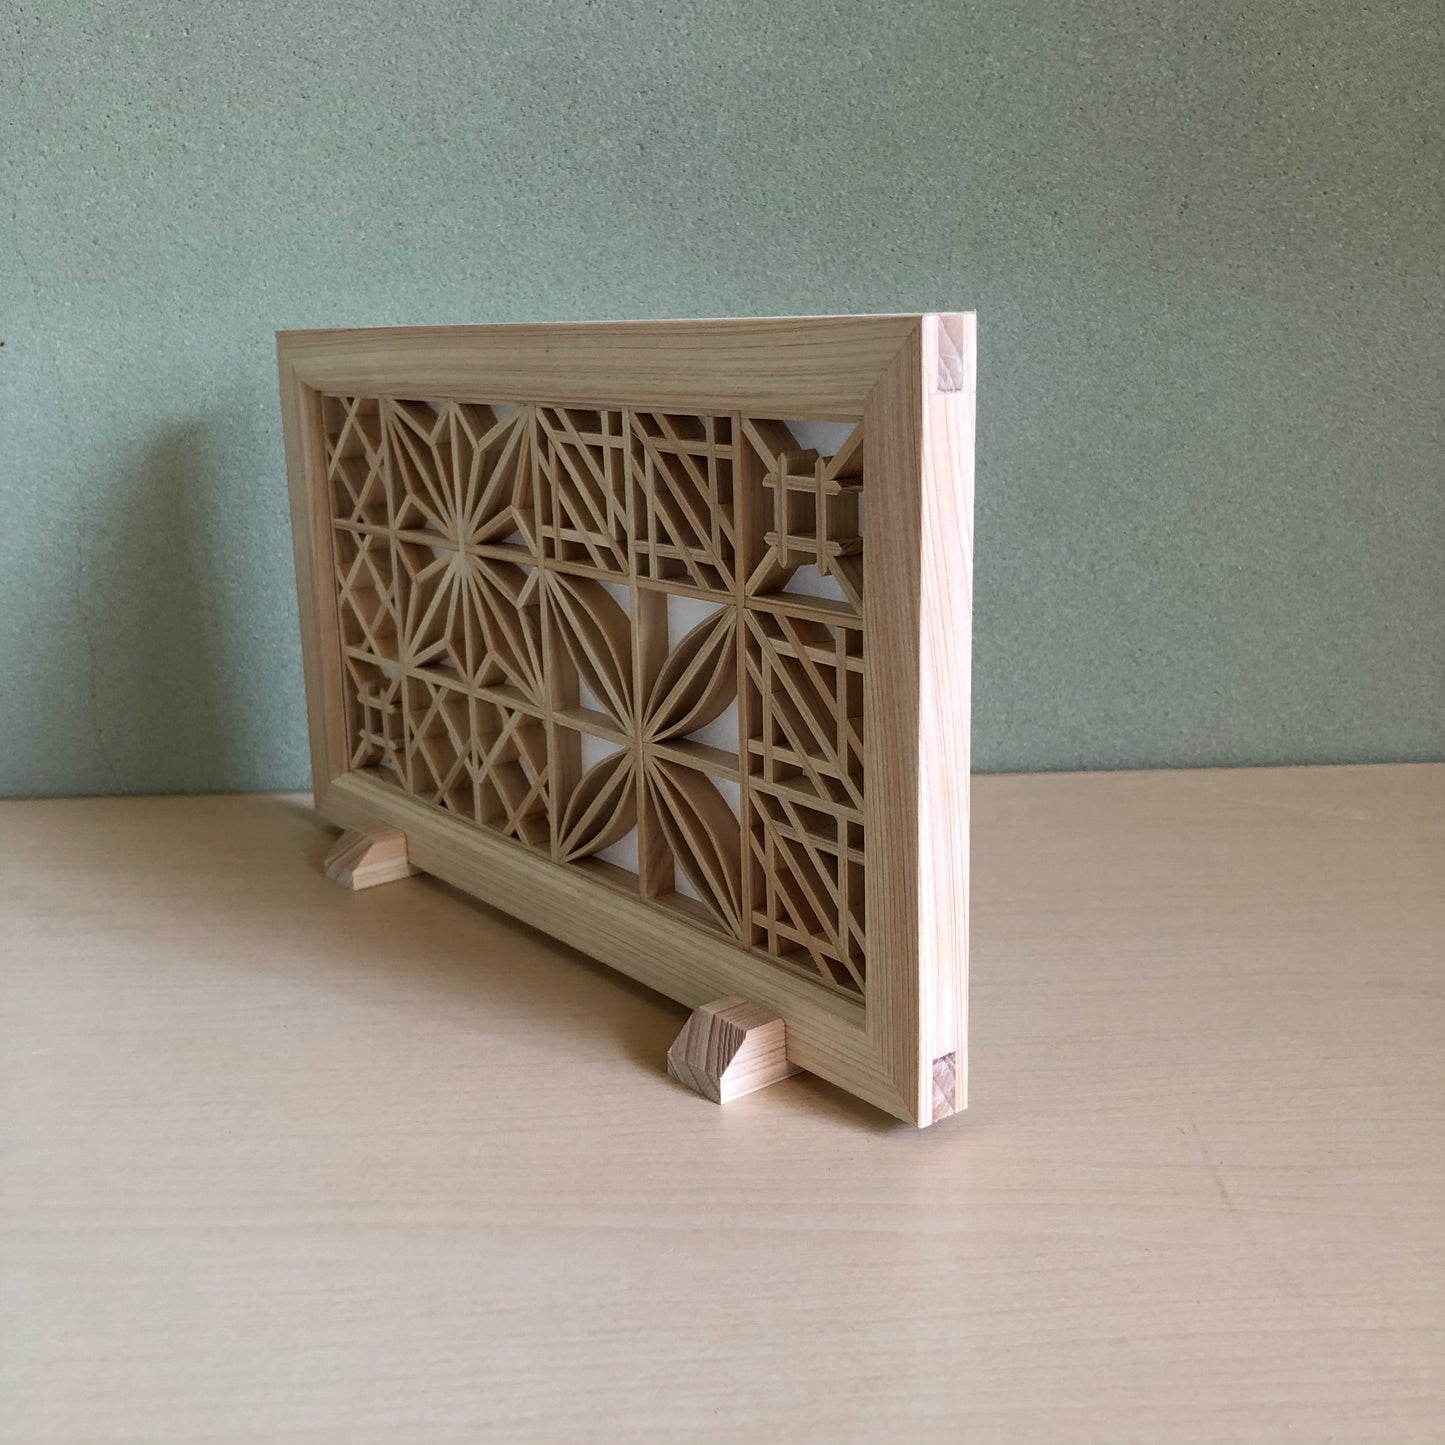 Kumiko work art panel S pattern 1 Japanese cypress with dedicated stand